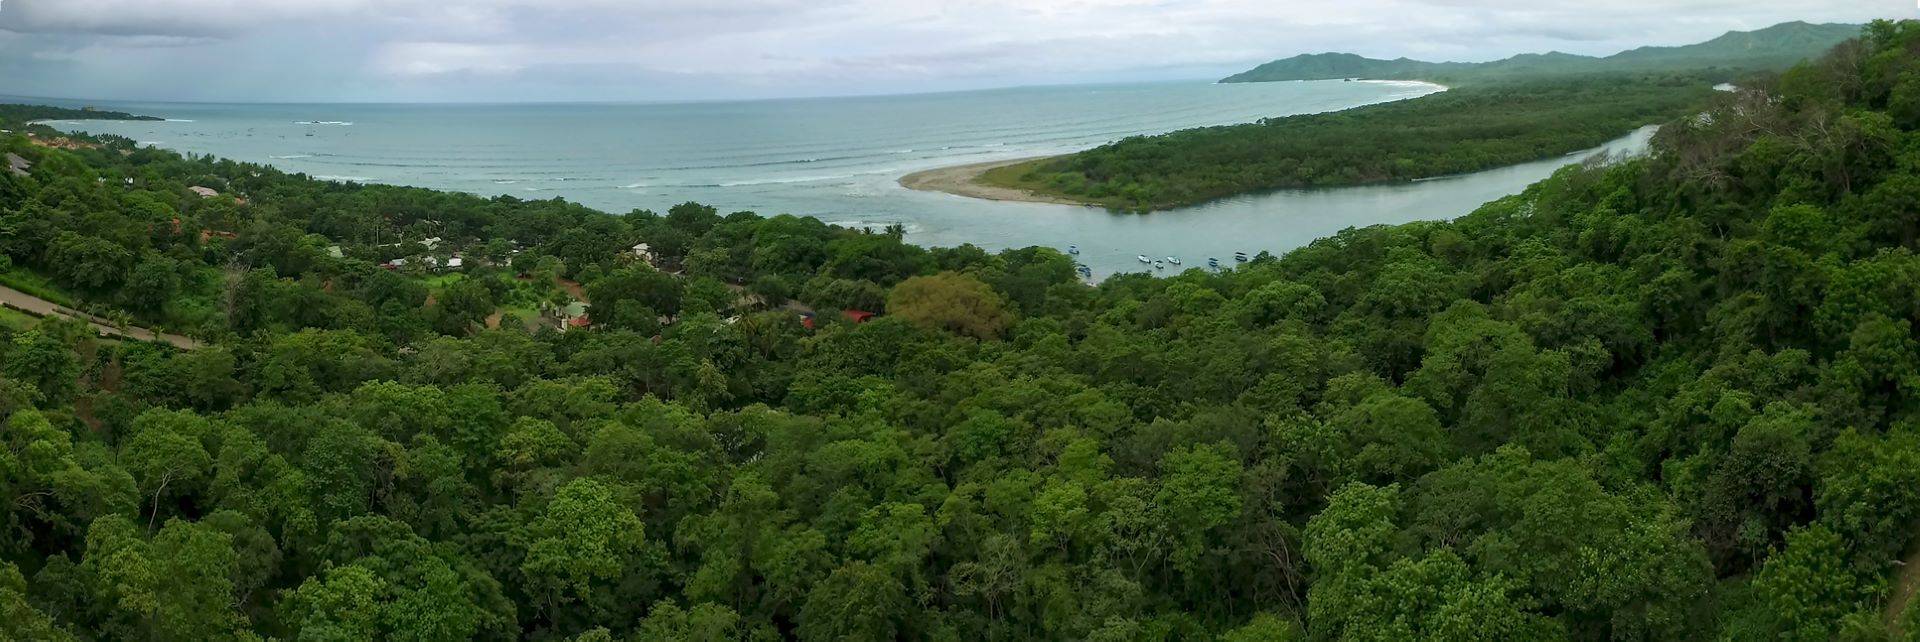 ocean view lot in Costa Rica